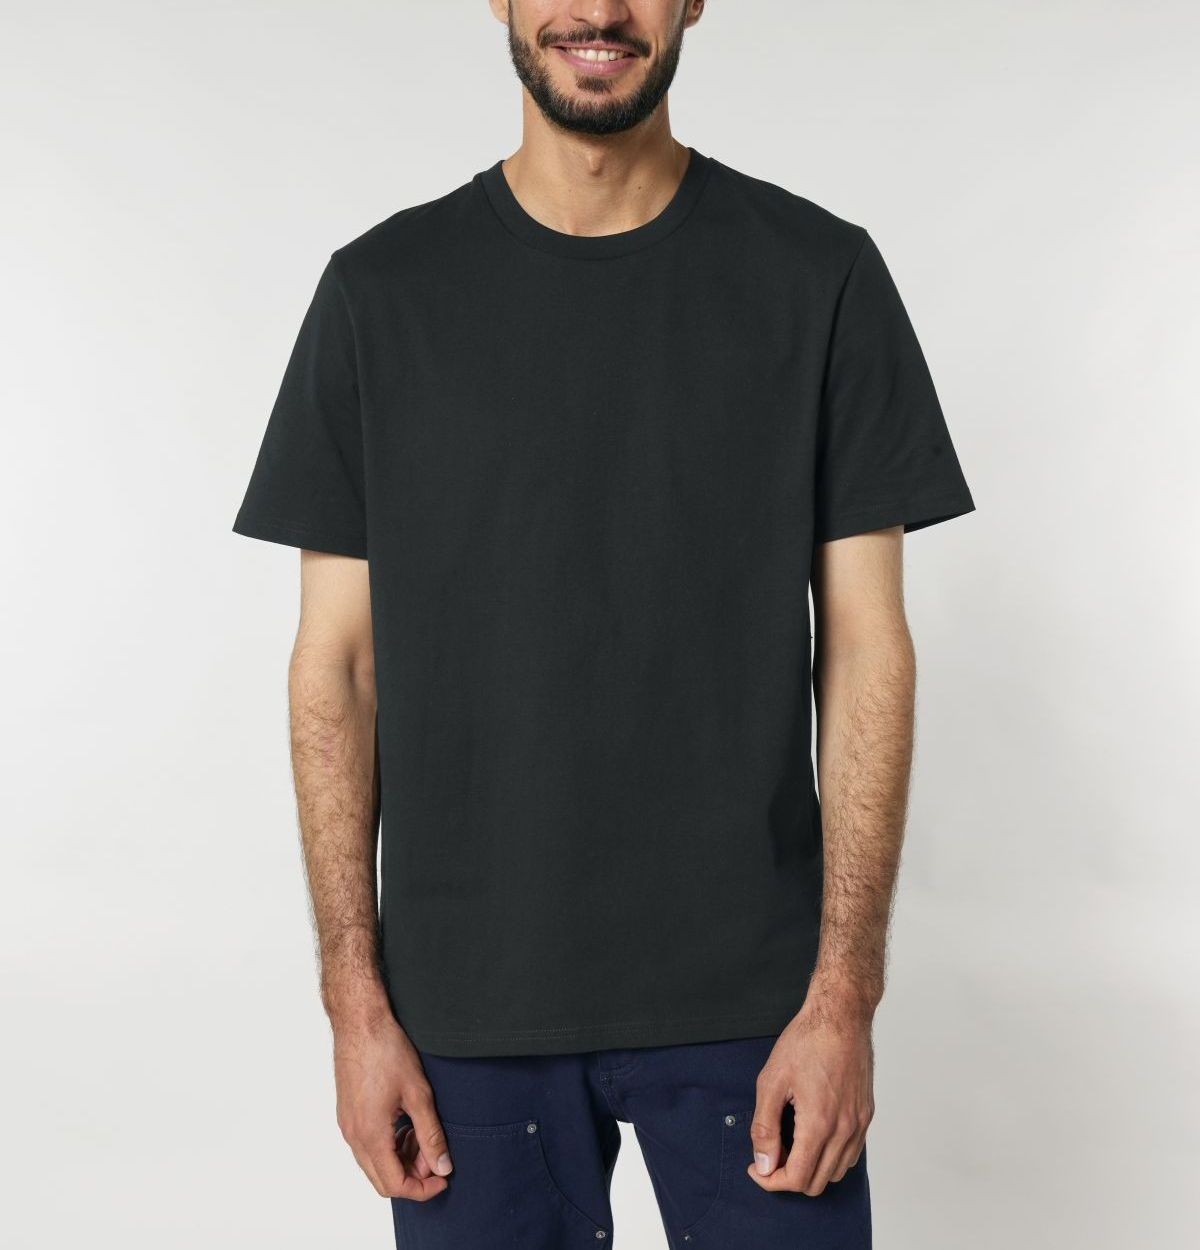 Basic T-Shirt Modell: Creative von Unipolar